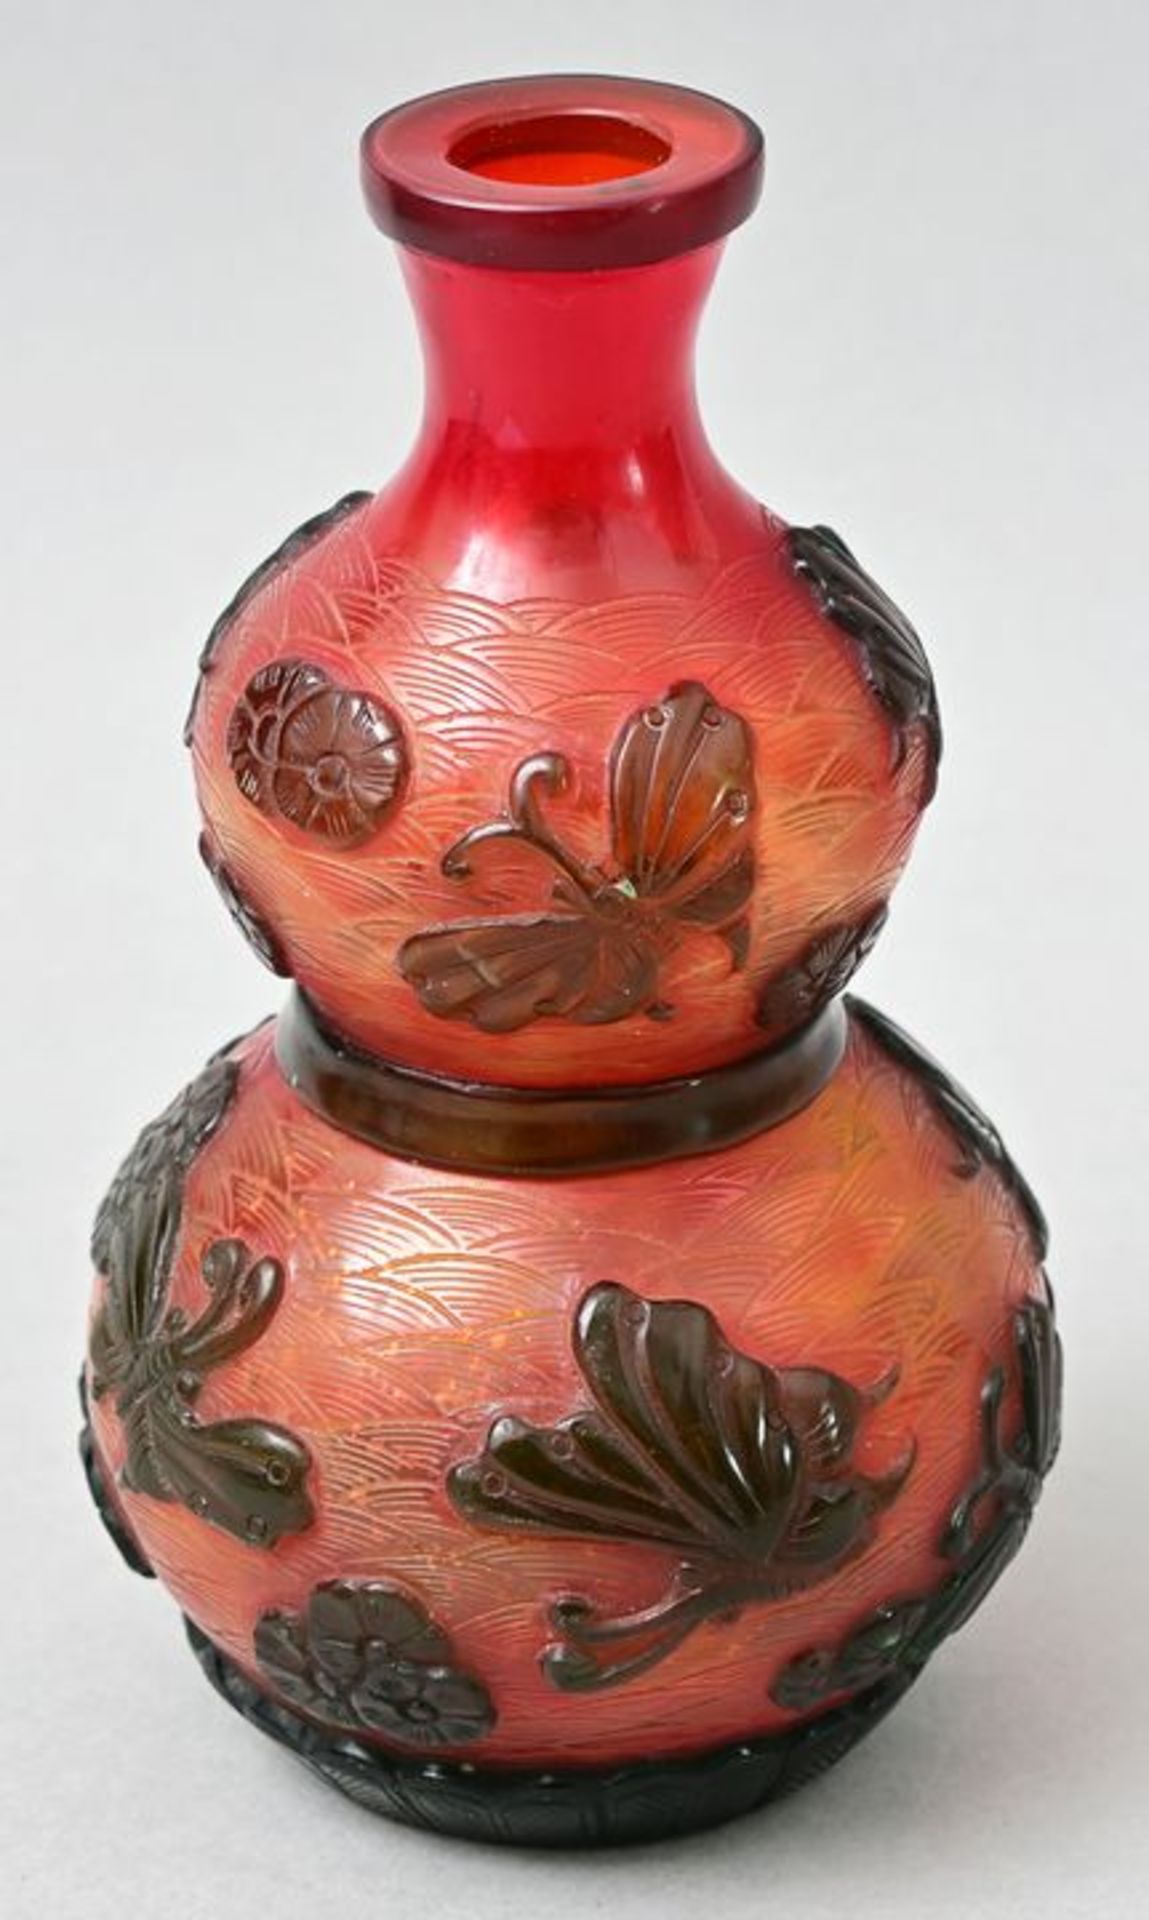 Flaschenvase Peking-Glas/ Peking glass bottle - Image 4 of 5